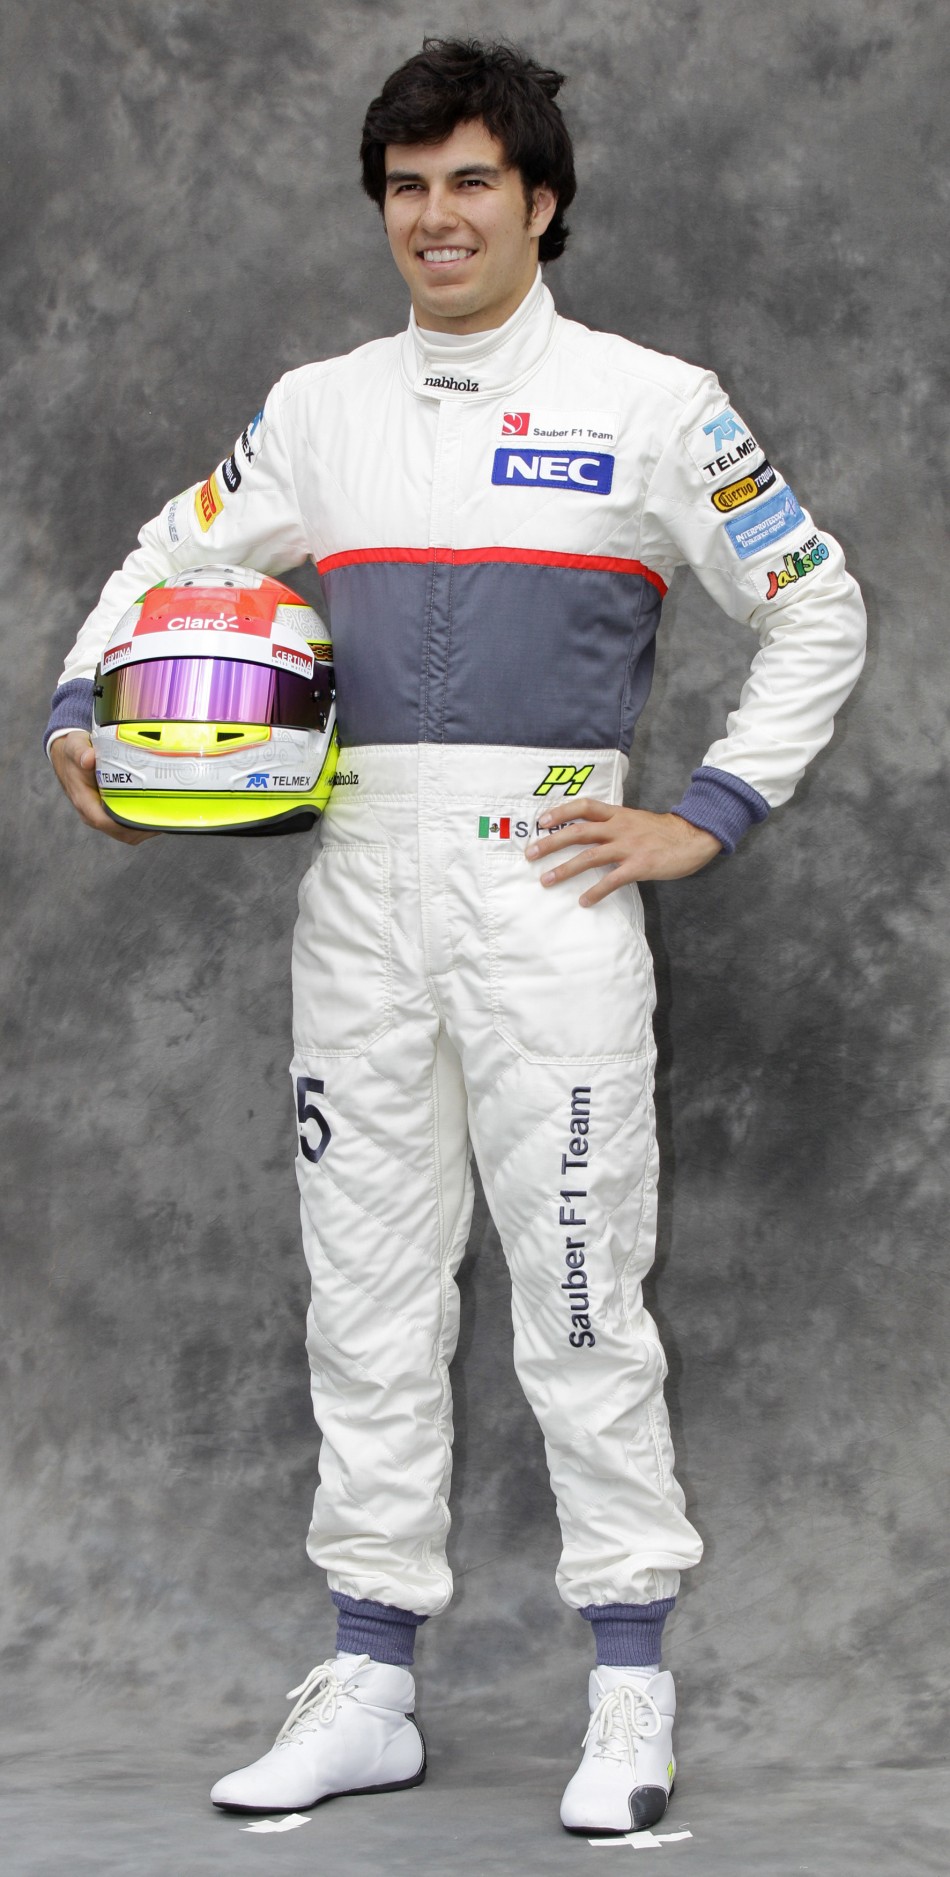 Sauber Formula One driver Perez poses prior to the Australian F1 Grand Prix at the Albert Park circuit in Melbourne